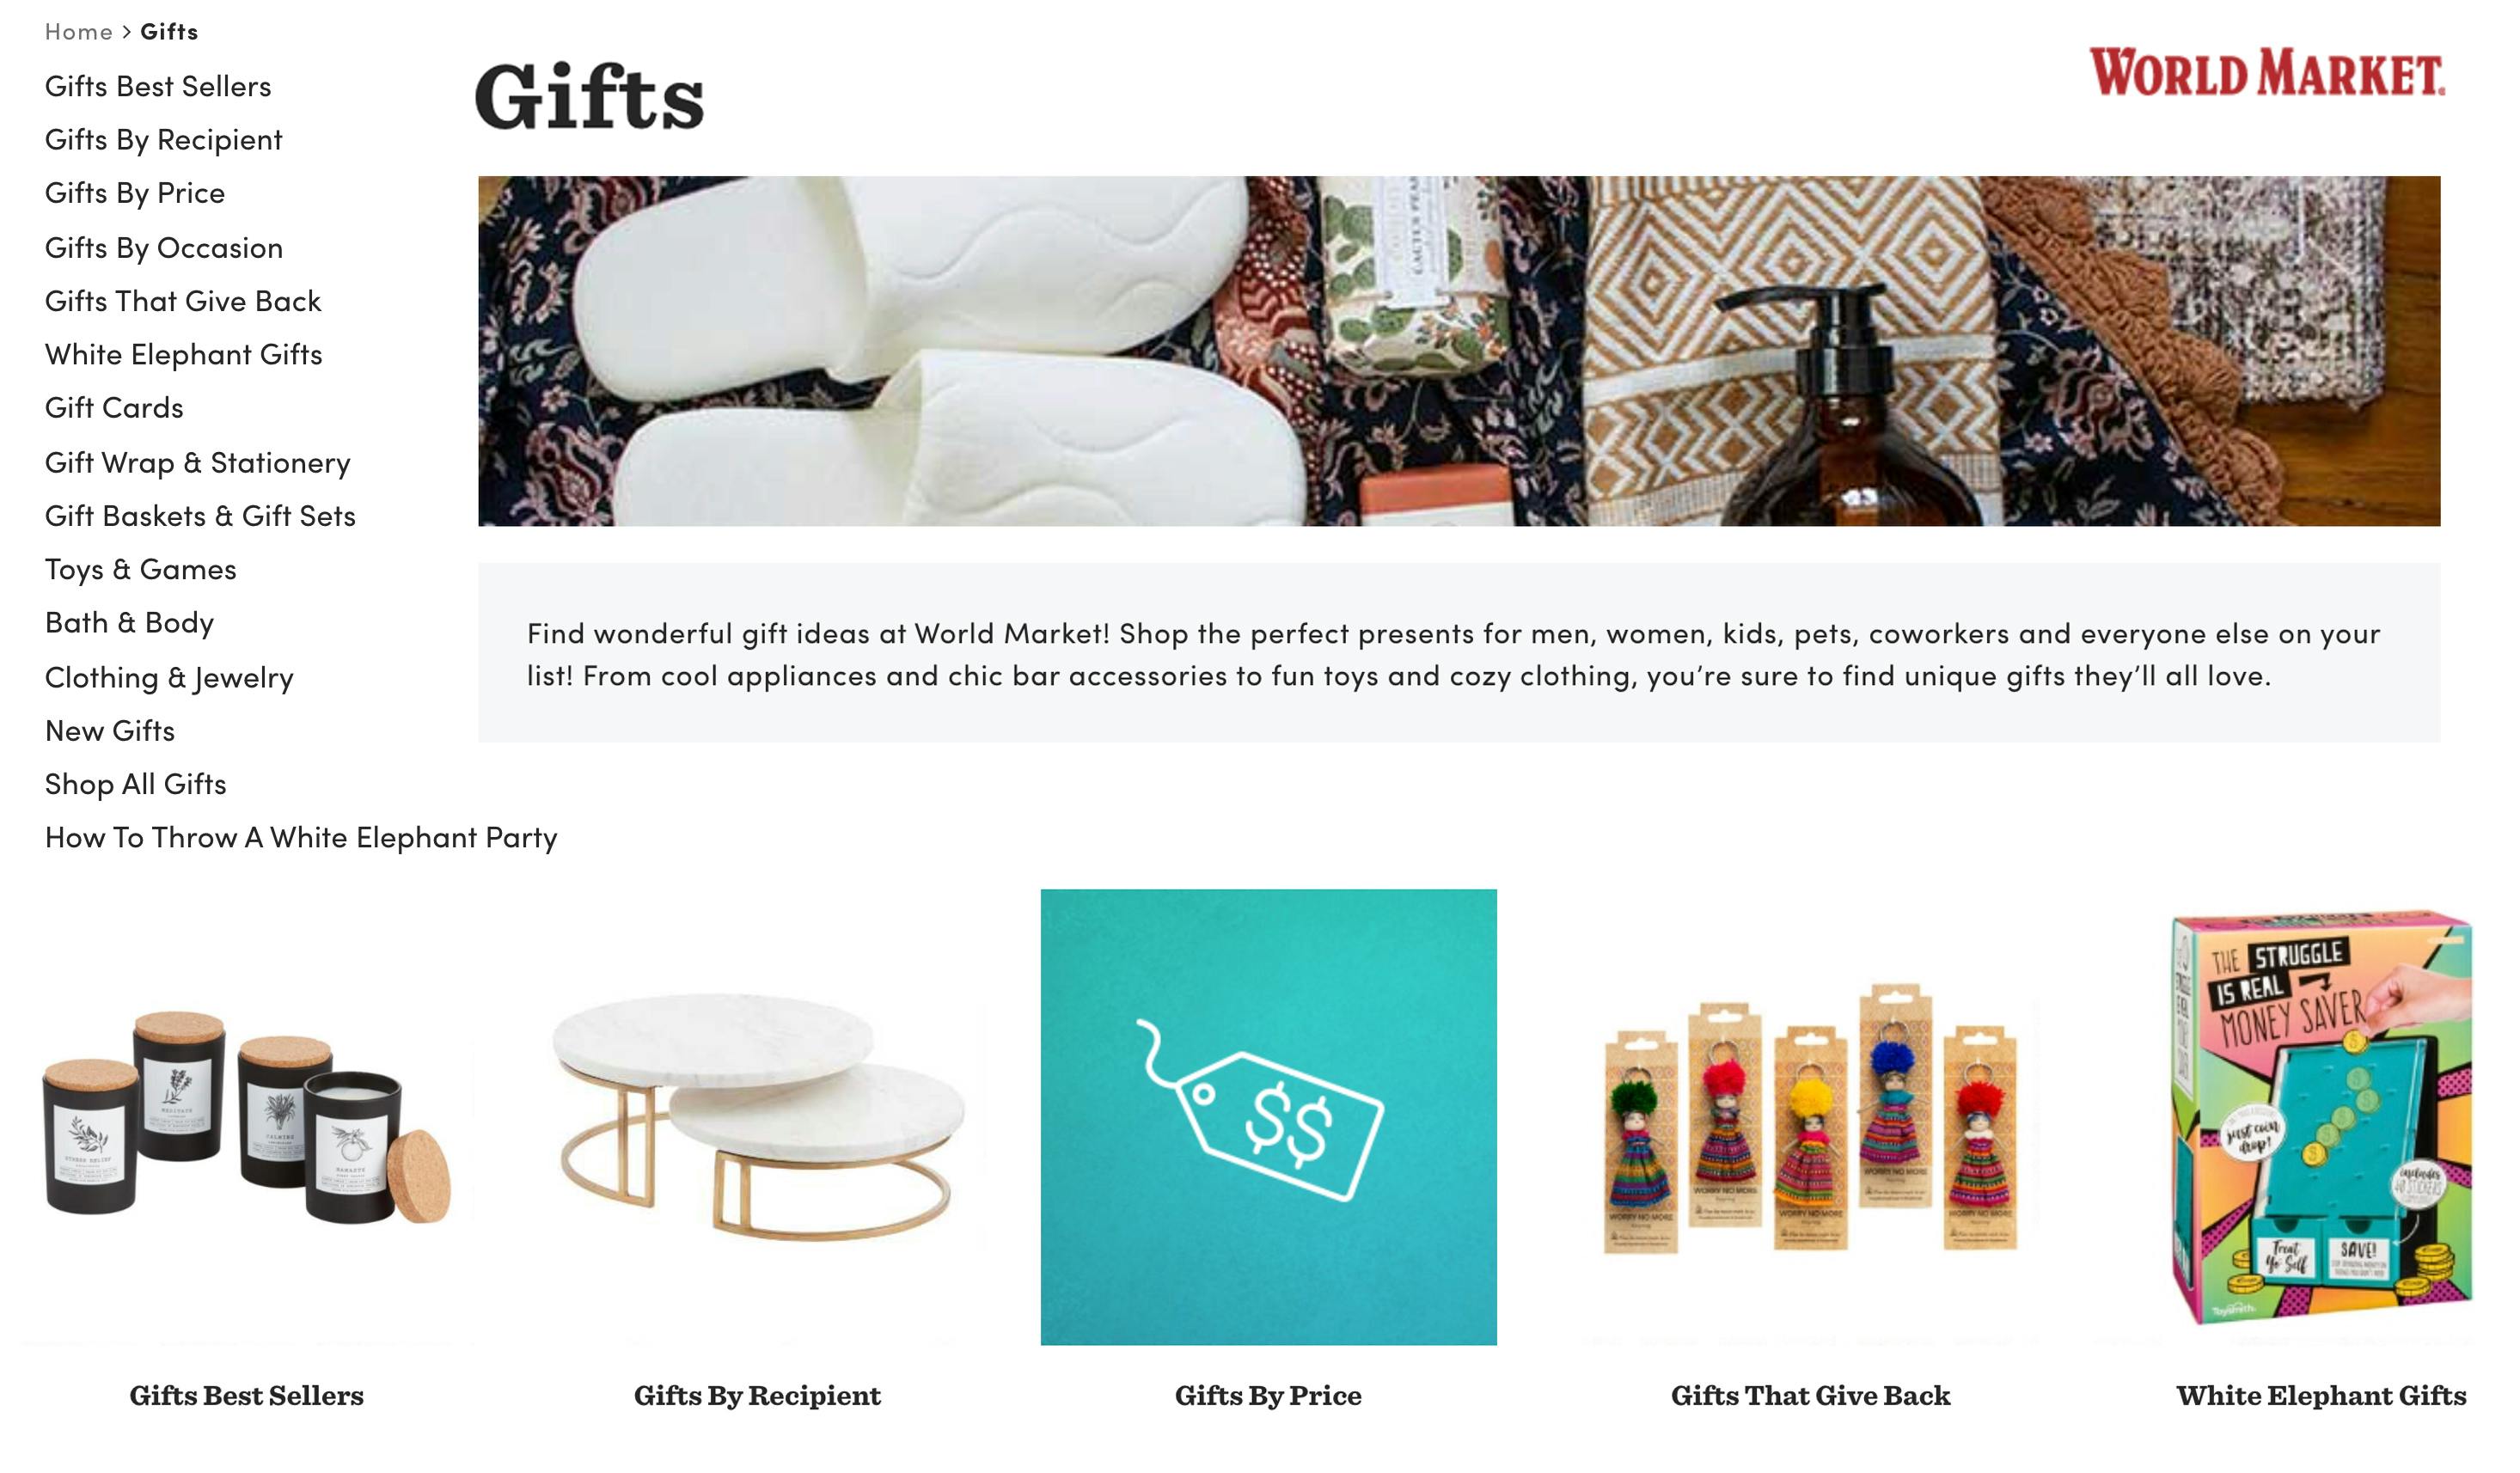 World Market holiday gift guide webpage screenshot